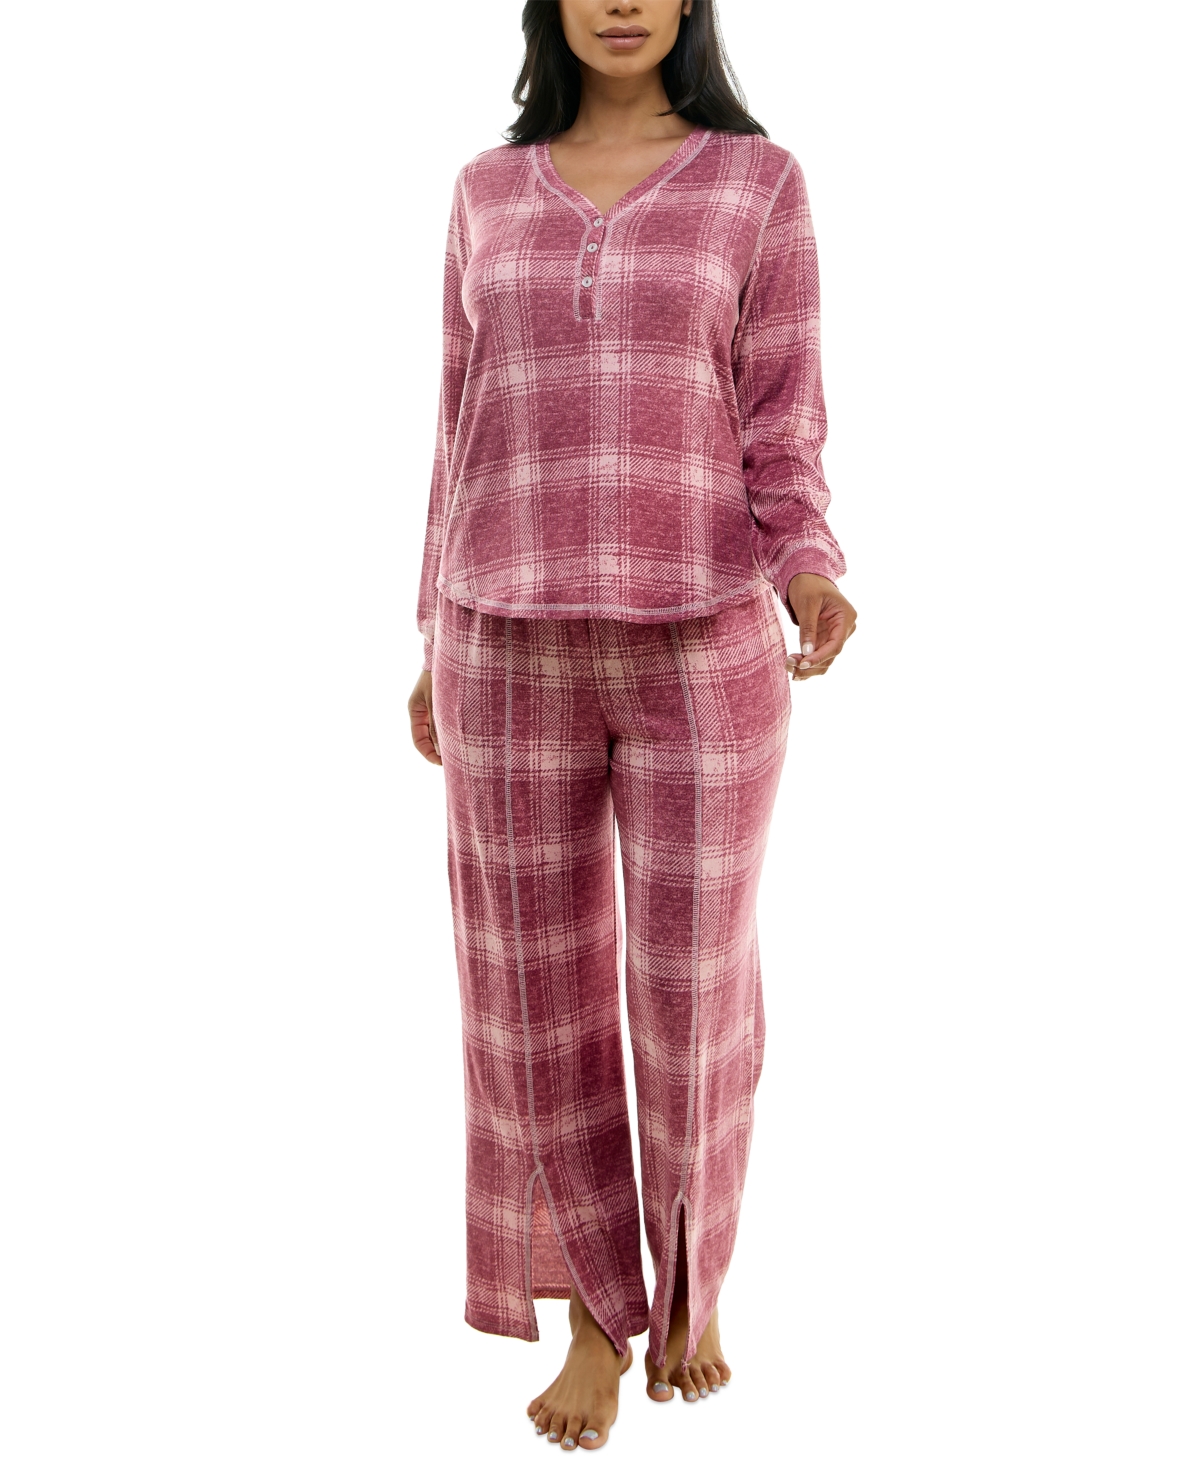 Women's 2-Pc. Printed Henley Pajamas Set - Beppo Distress Check